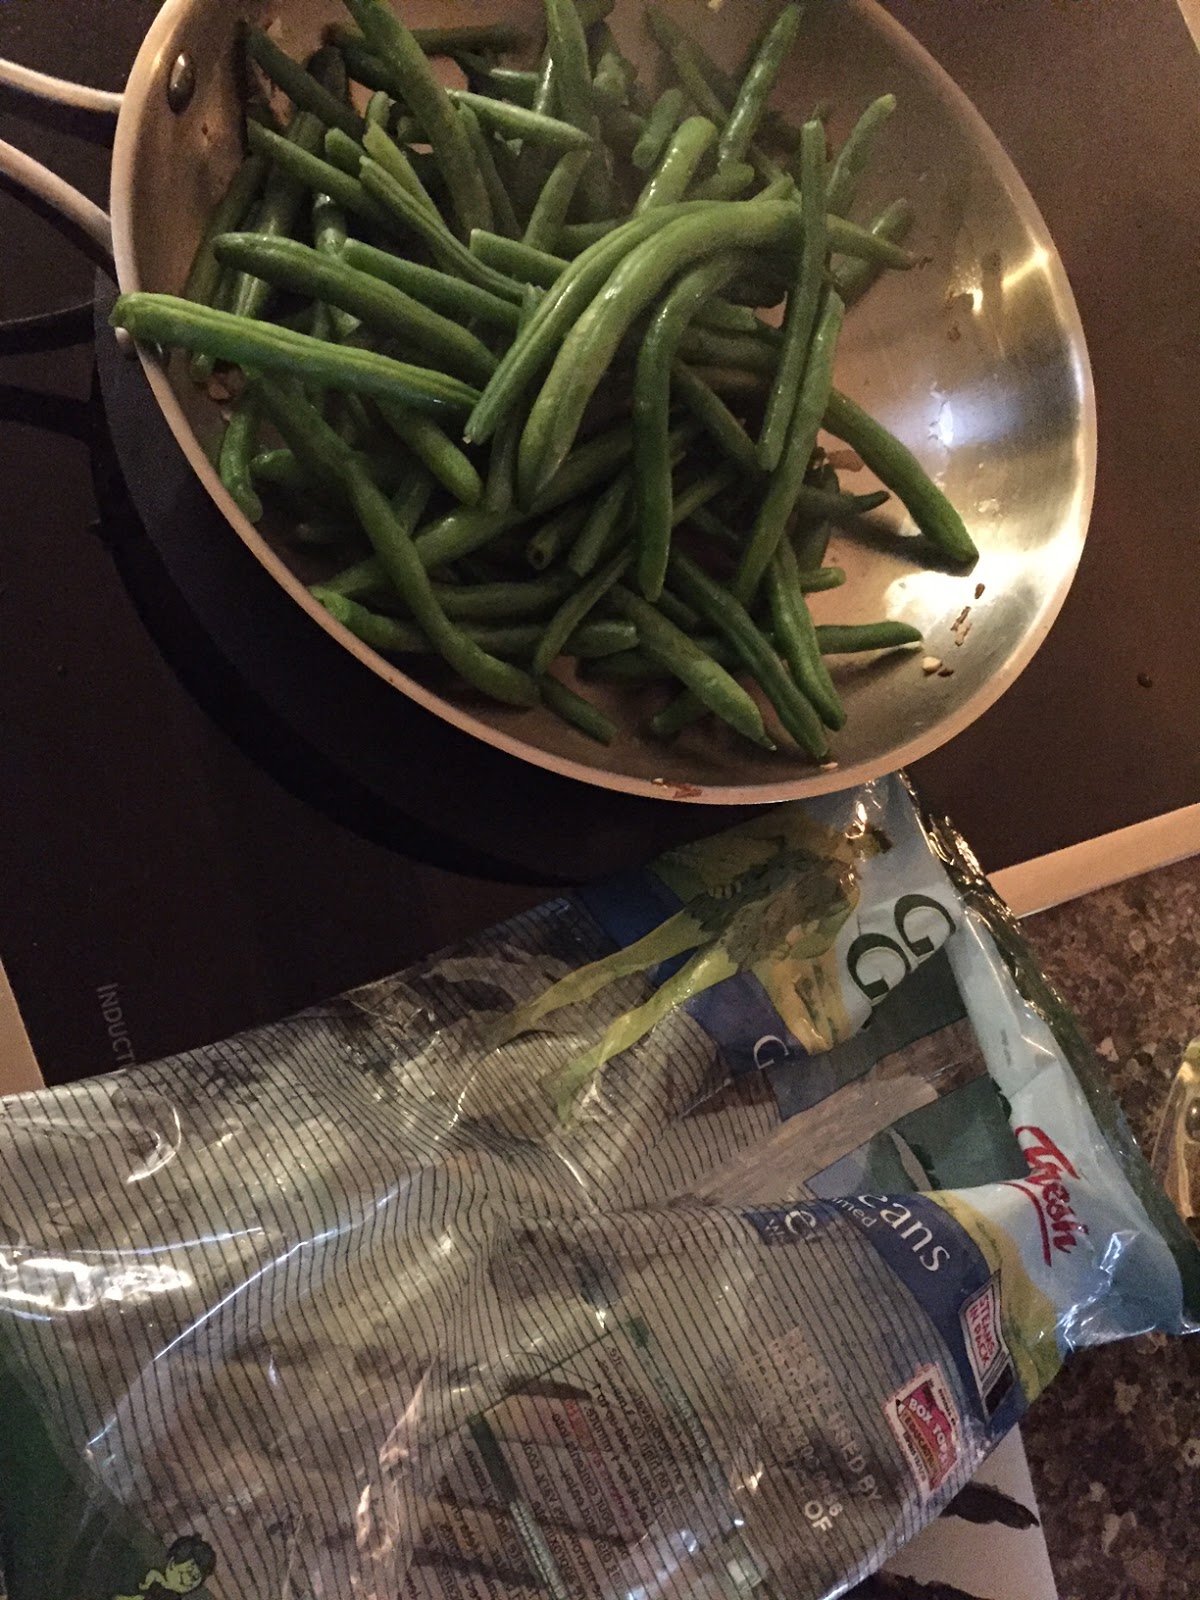 Stuff, Things, etc.: Grown-up Green Beans